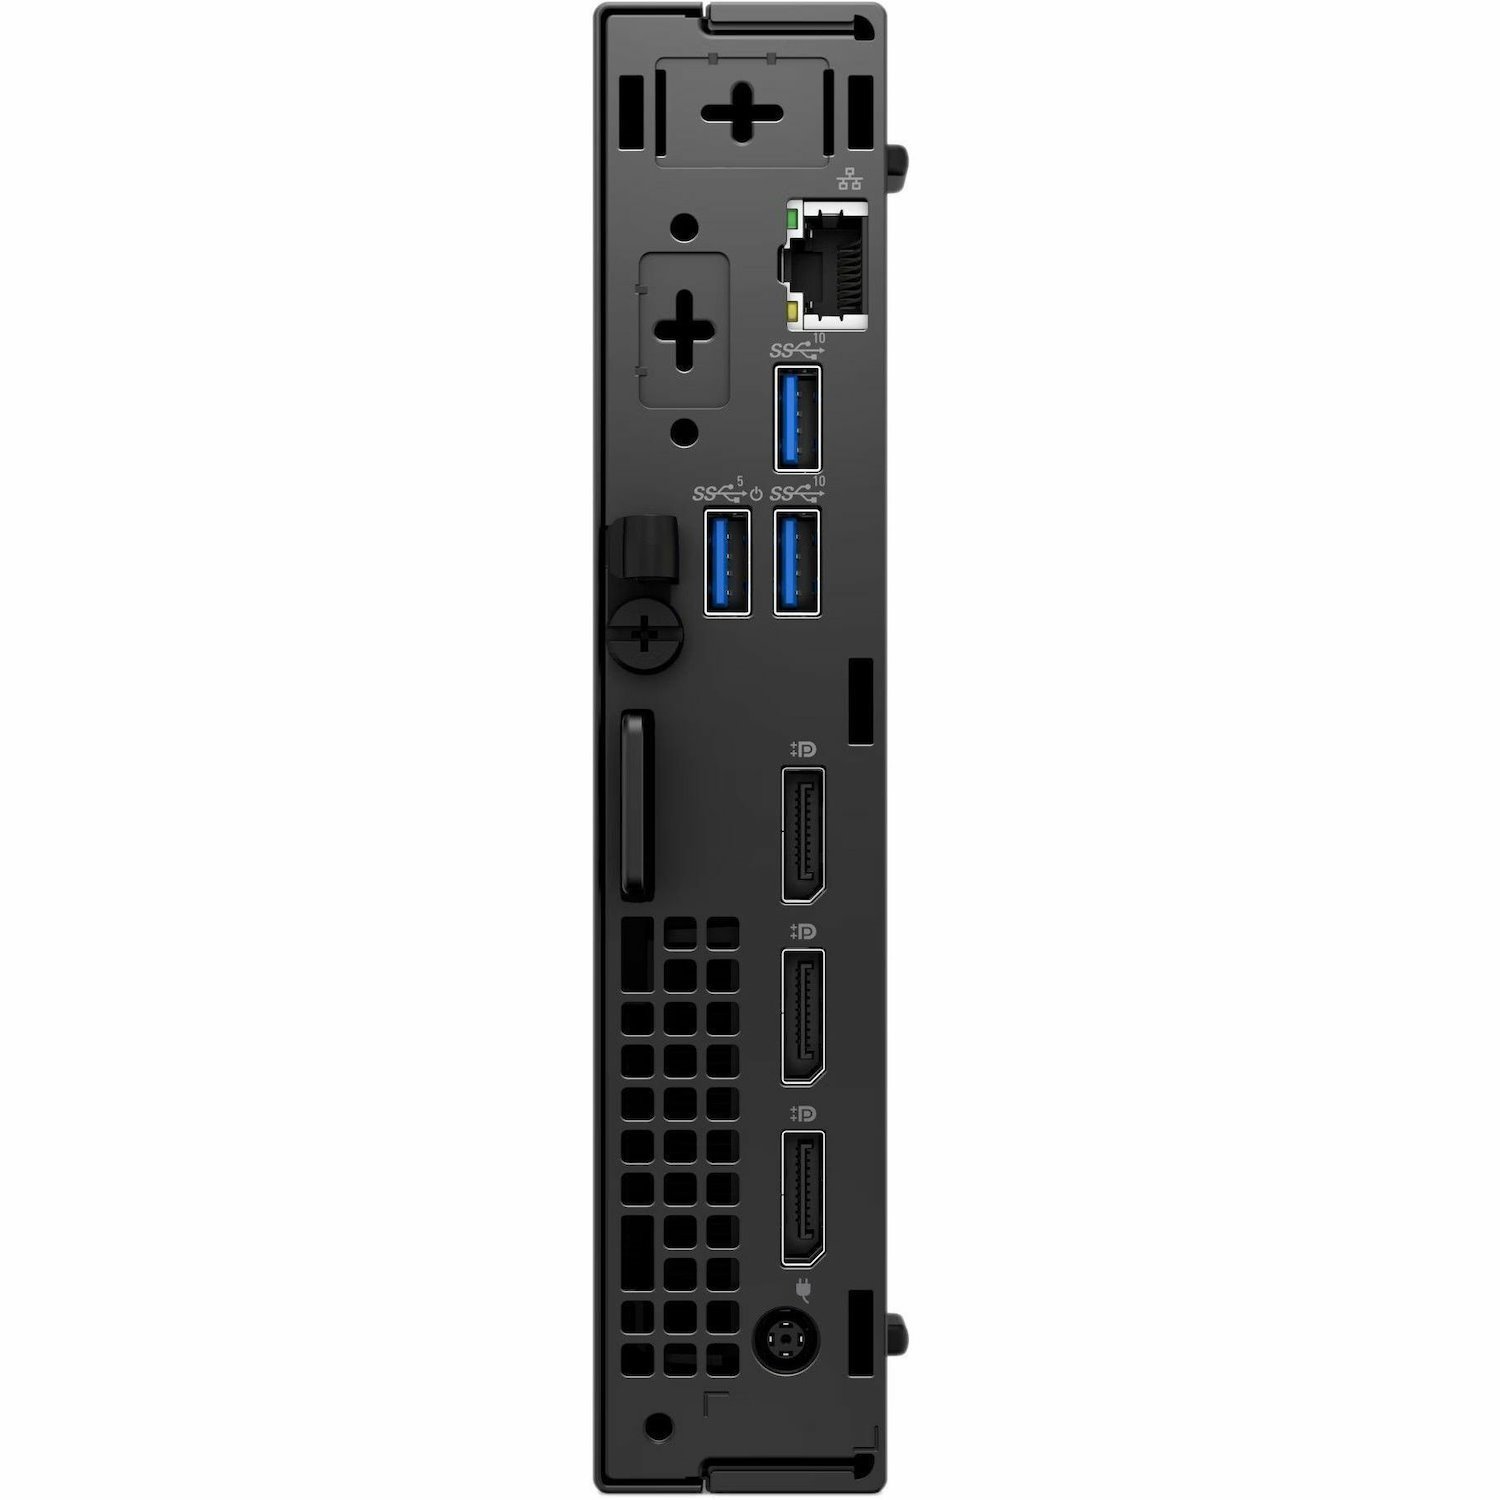 Dell OptiPlex 7000 7020 Plus Desktop Computer - Intel Core i7 14th Gen i7-14700T - 32 GB - 512 GB SSD - Micro PC - Black